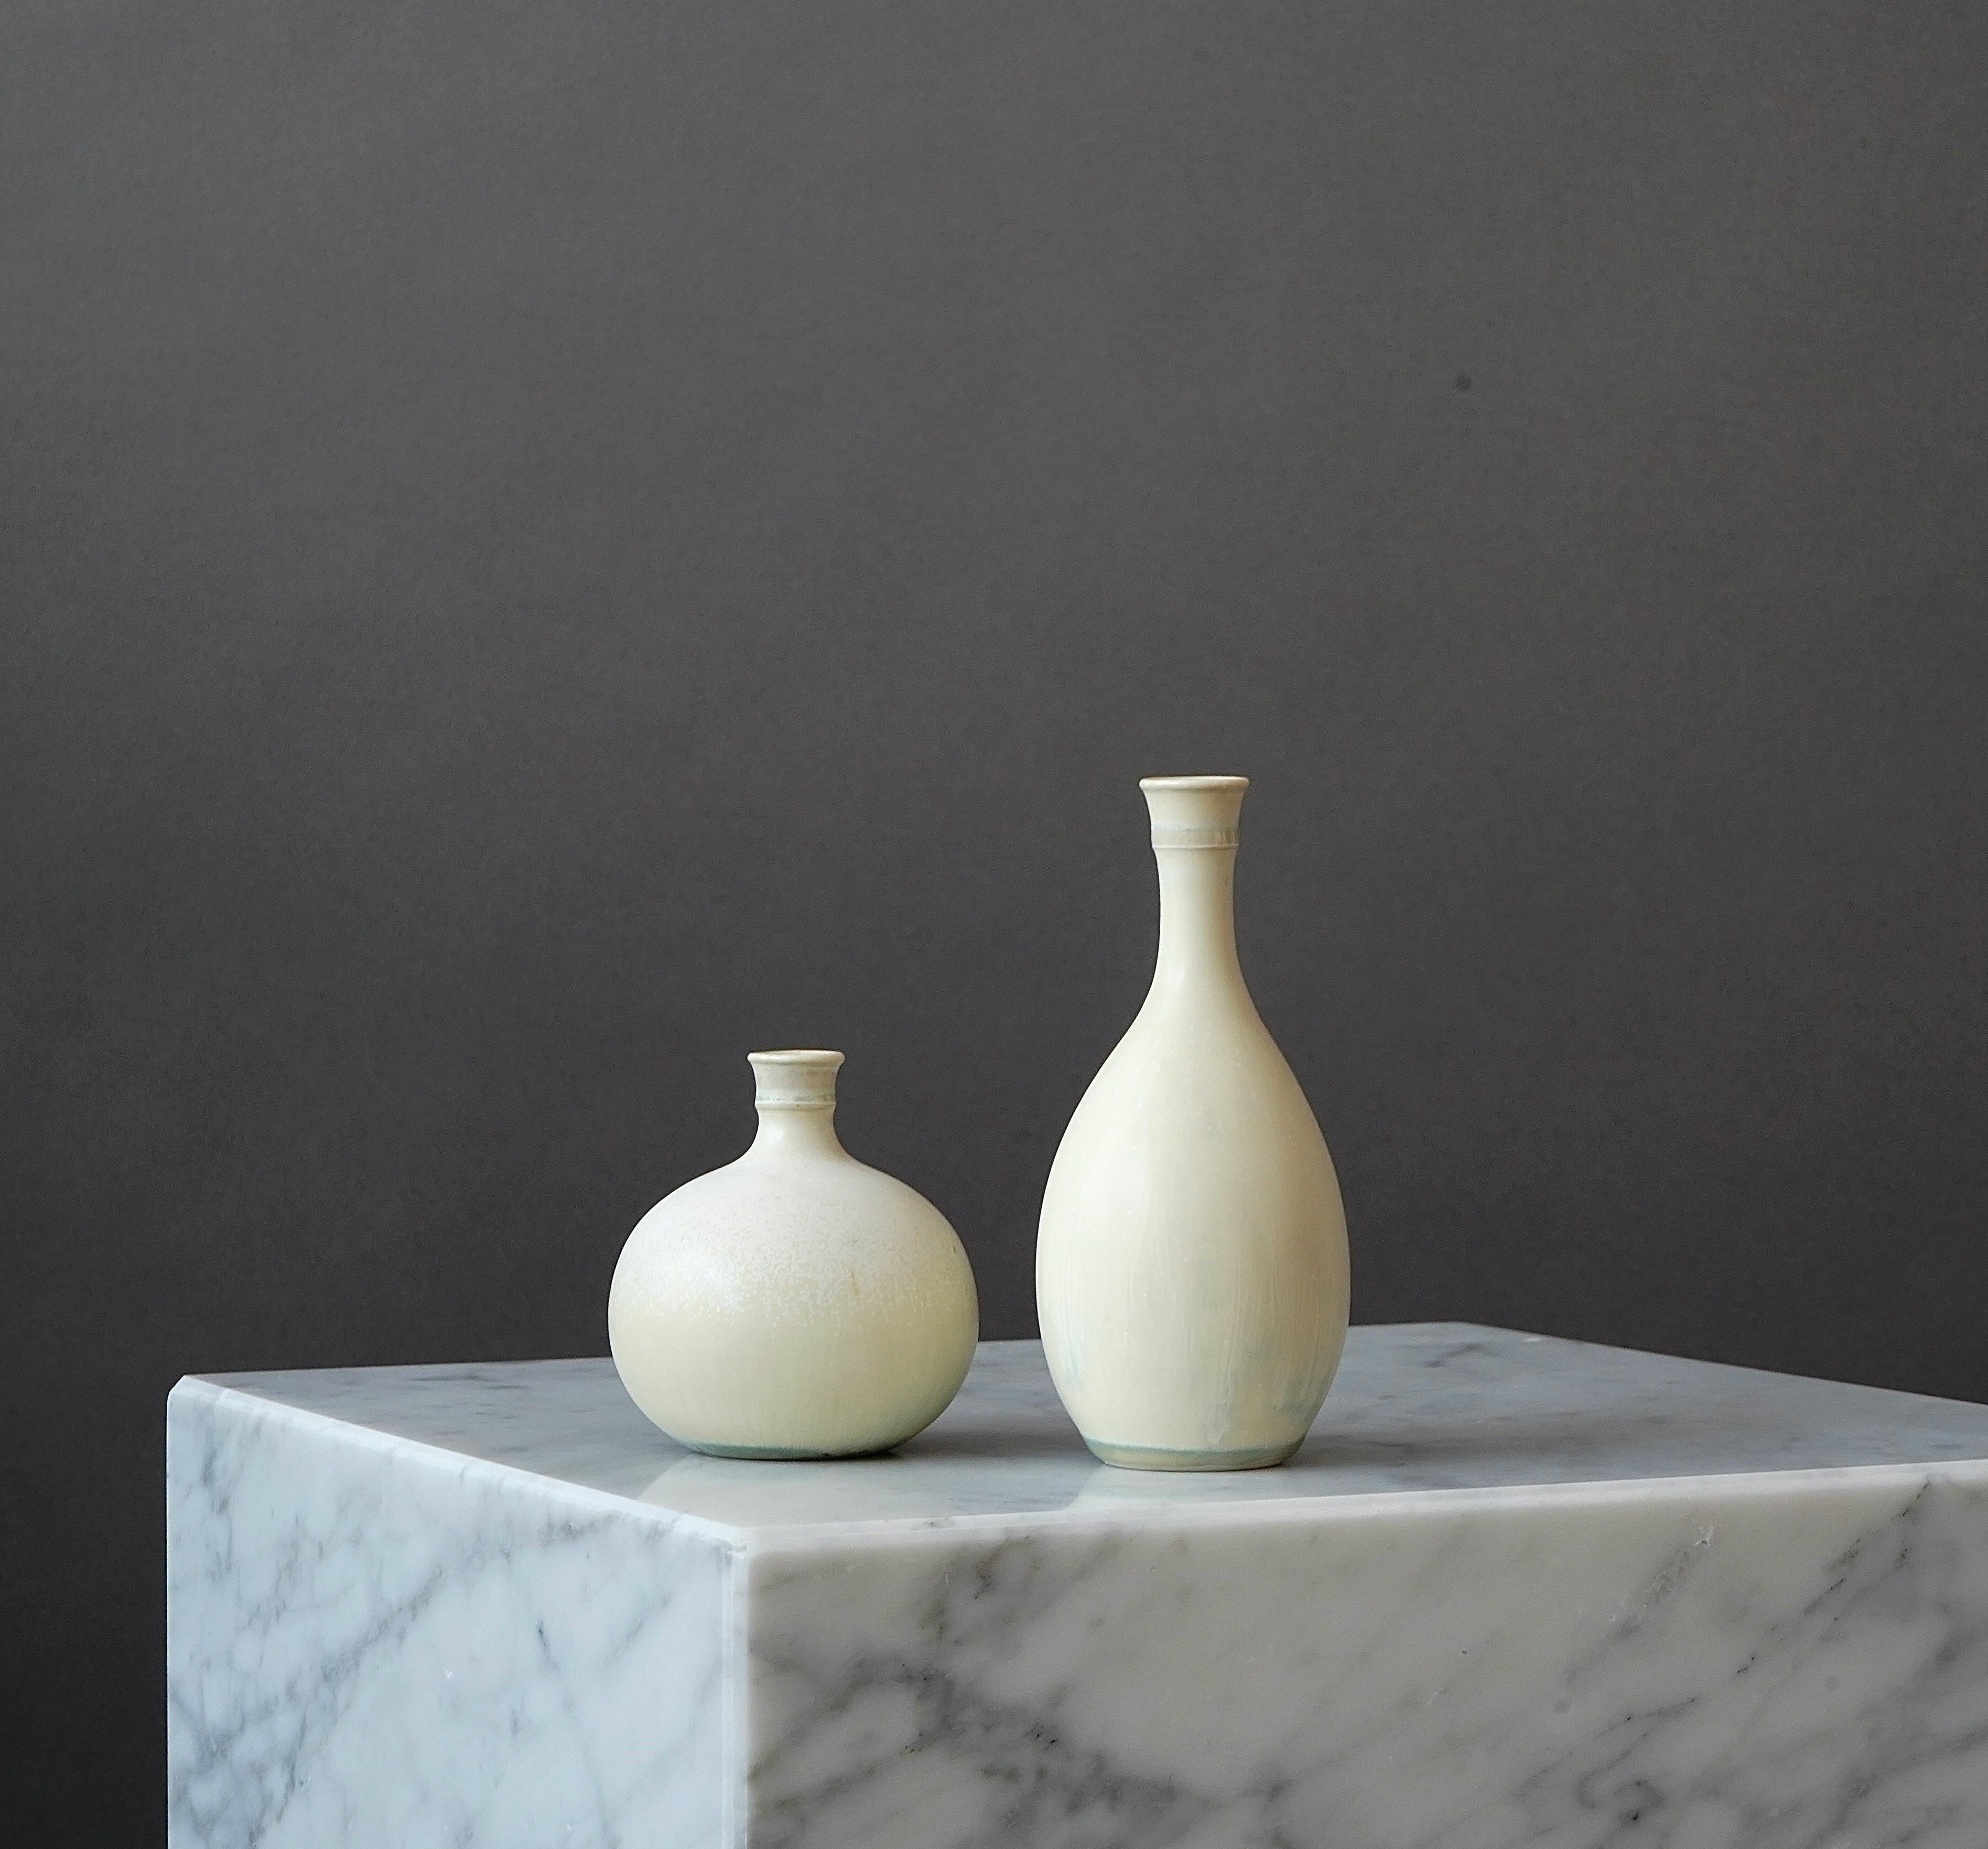 Turned Set of 2 Stoneware Vases by Stig Lindberg for Gustavsberg Studio, Sweden, 1950s For Sale